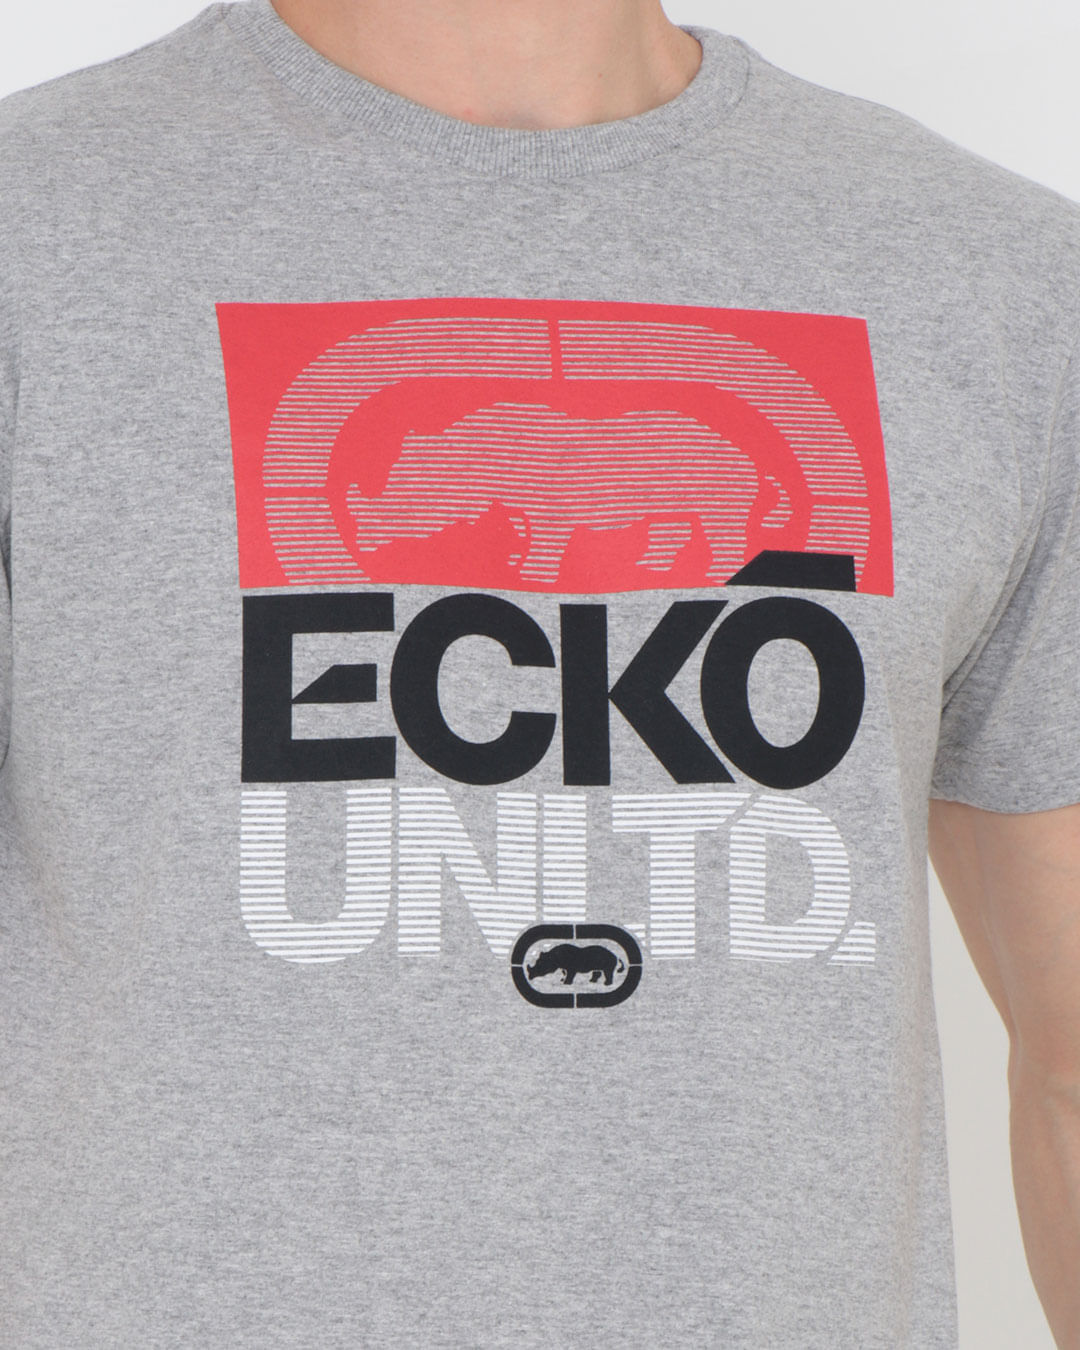 Camiseta-U135a-Ecko---Cinza-Claro